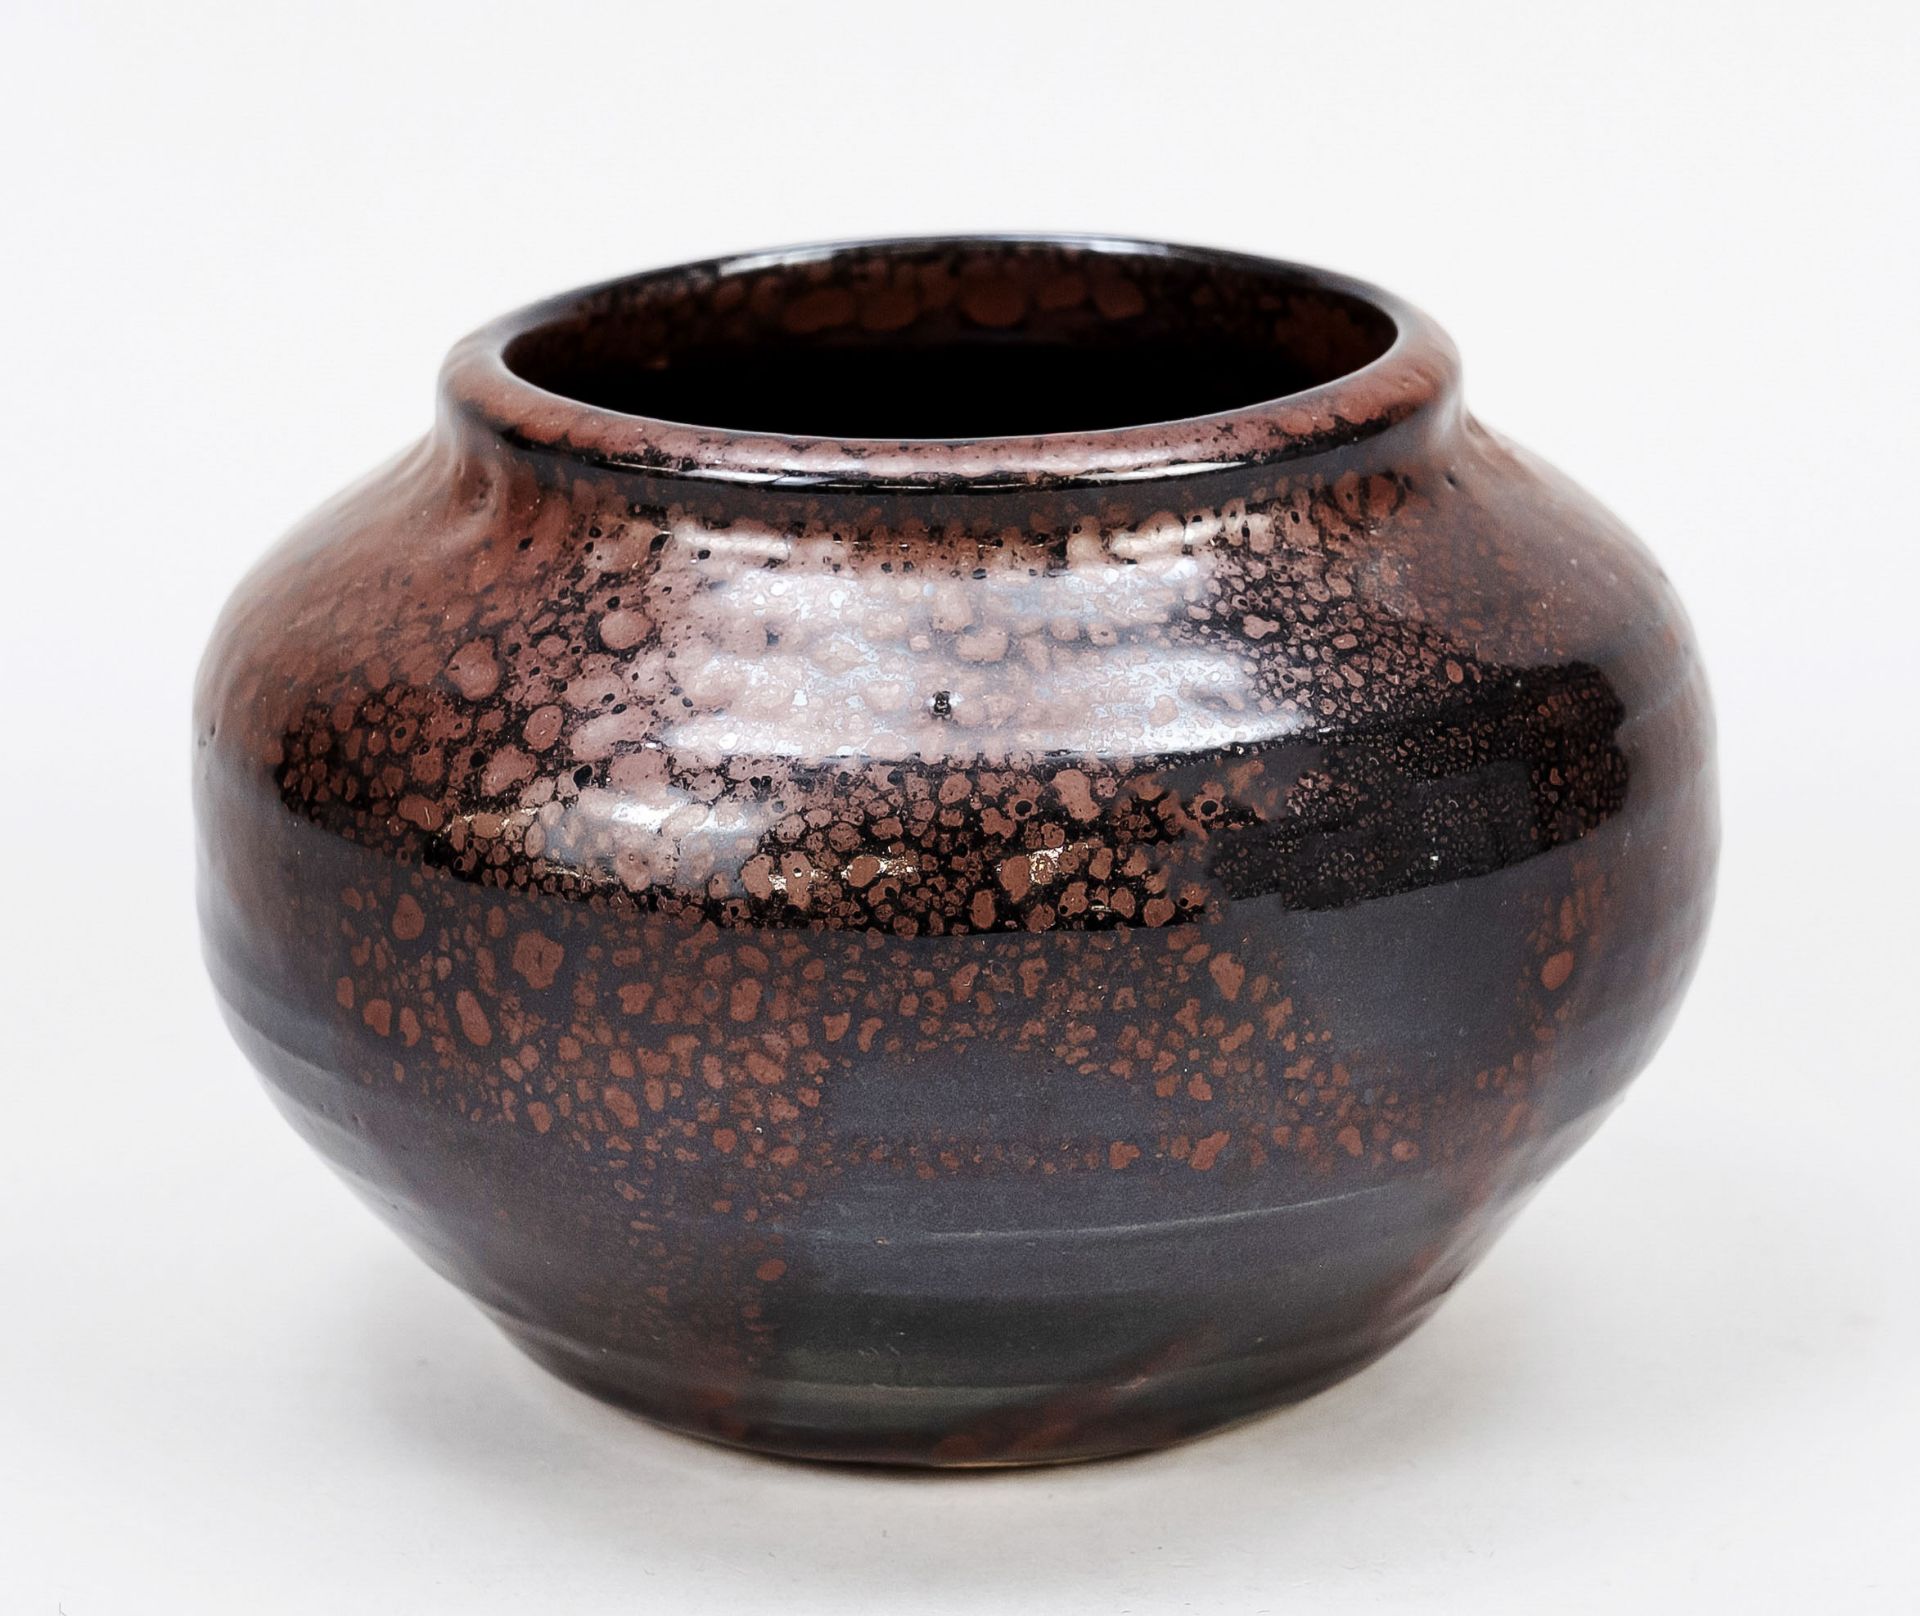 Temmoku shoulder pot, China, 20th c., studio pottery imitating Song dynasty style, dark oil stain